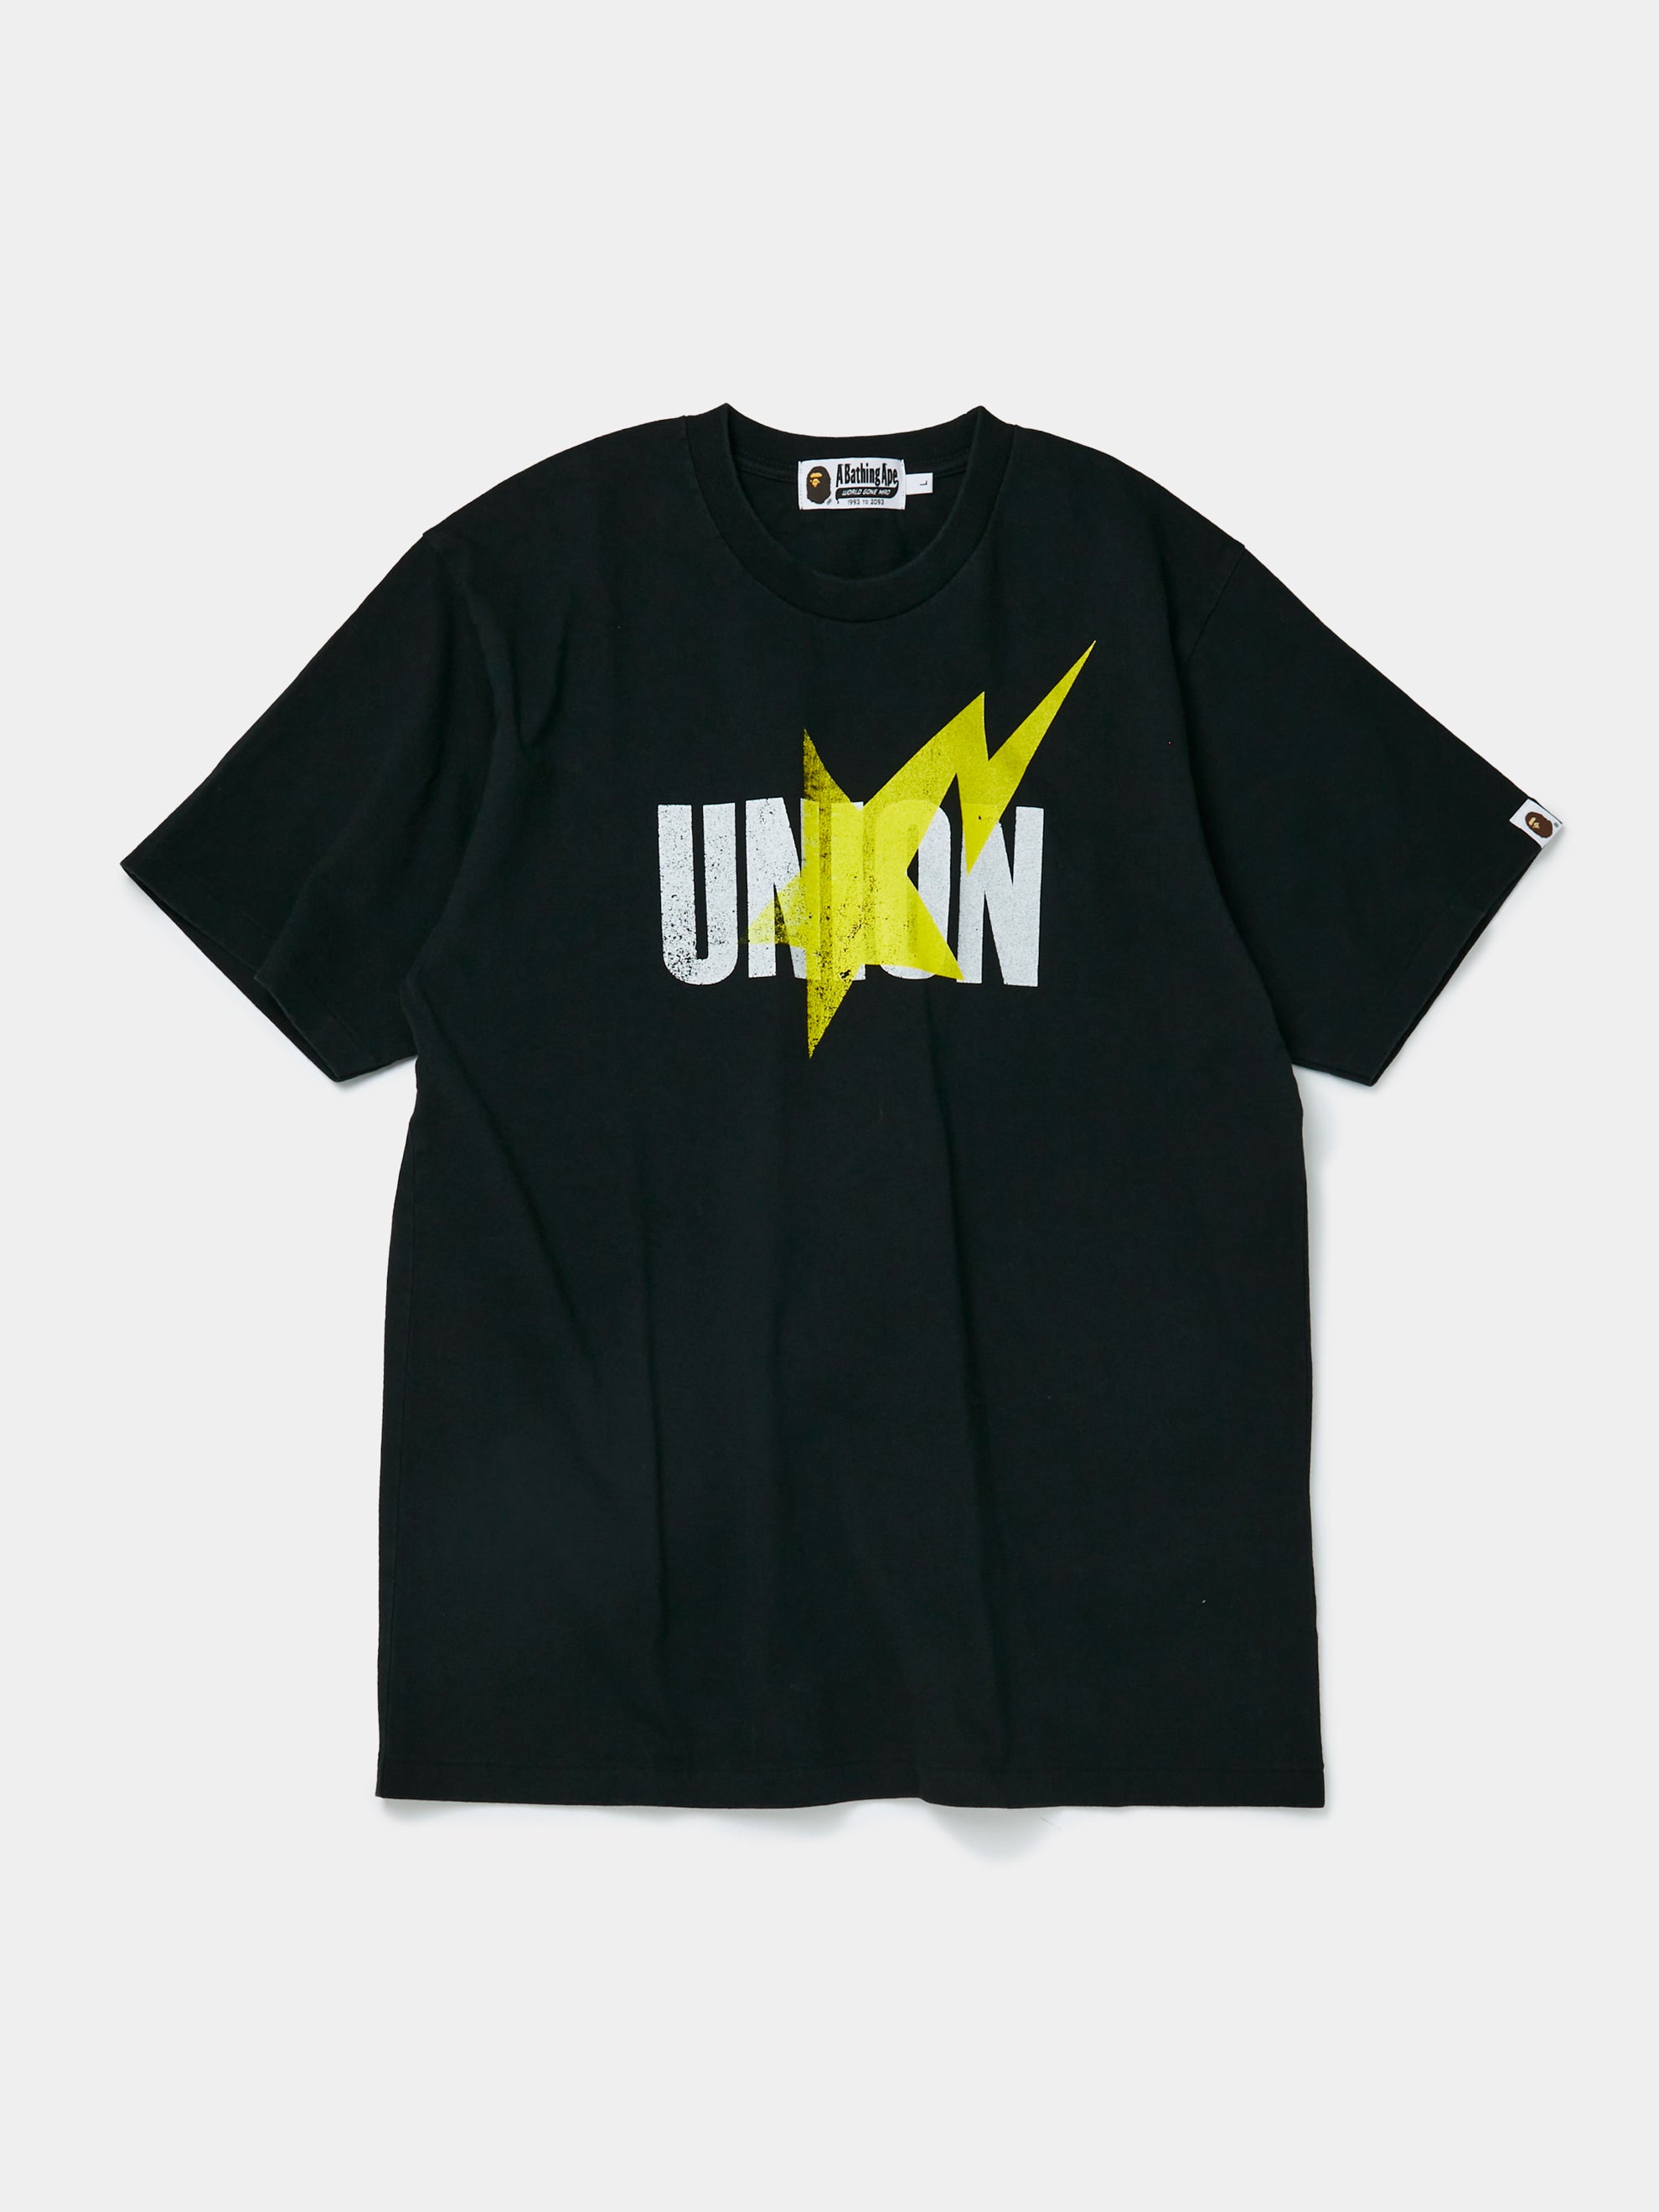 BAPE x UNION Sta T-Shirt (Black)